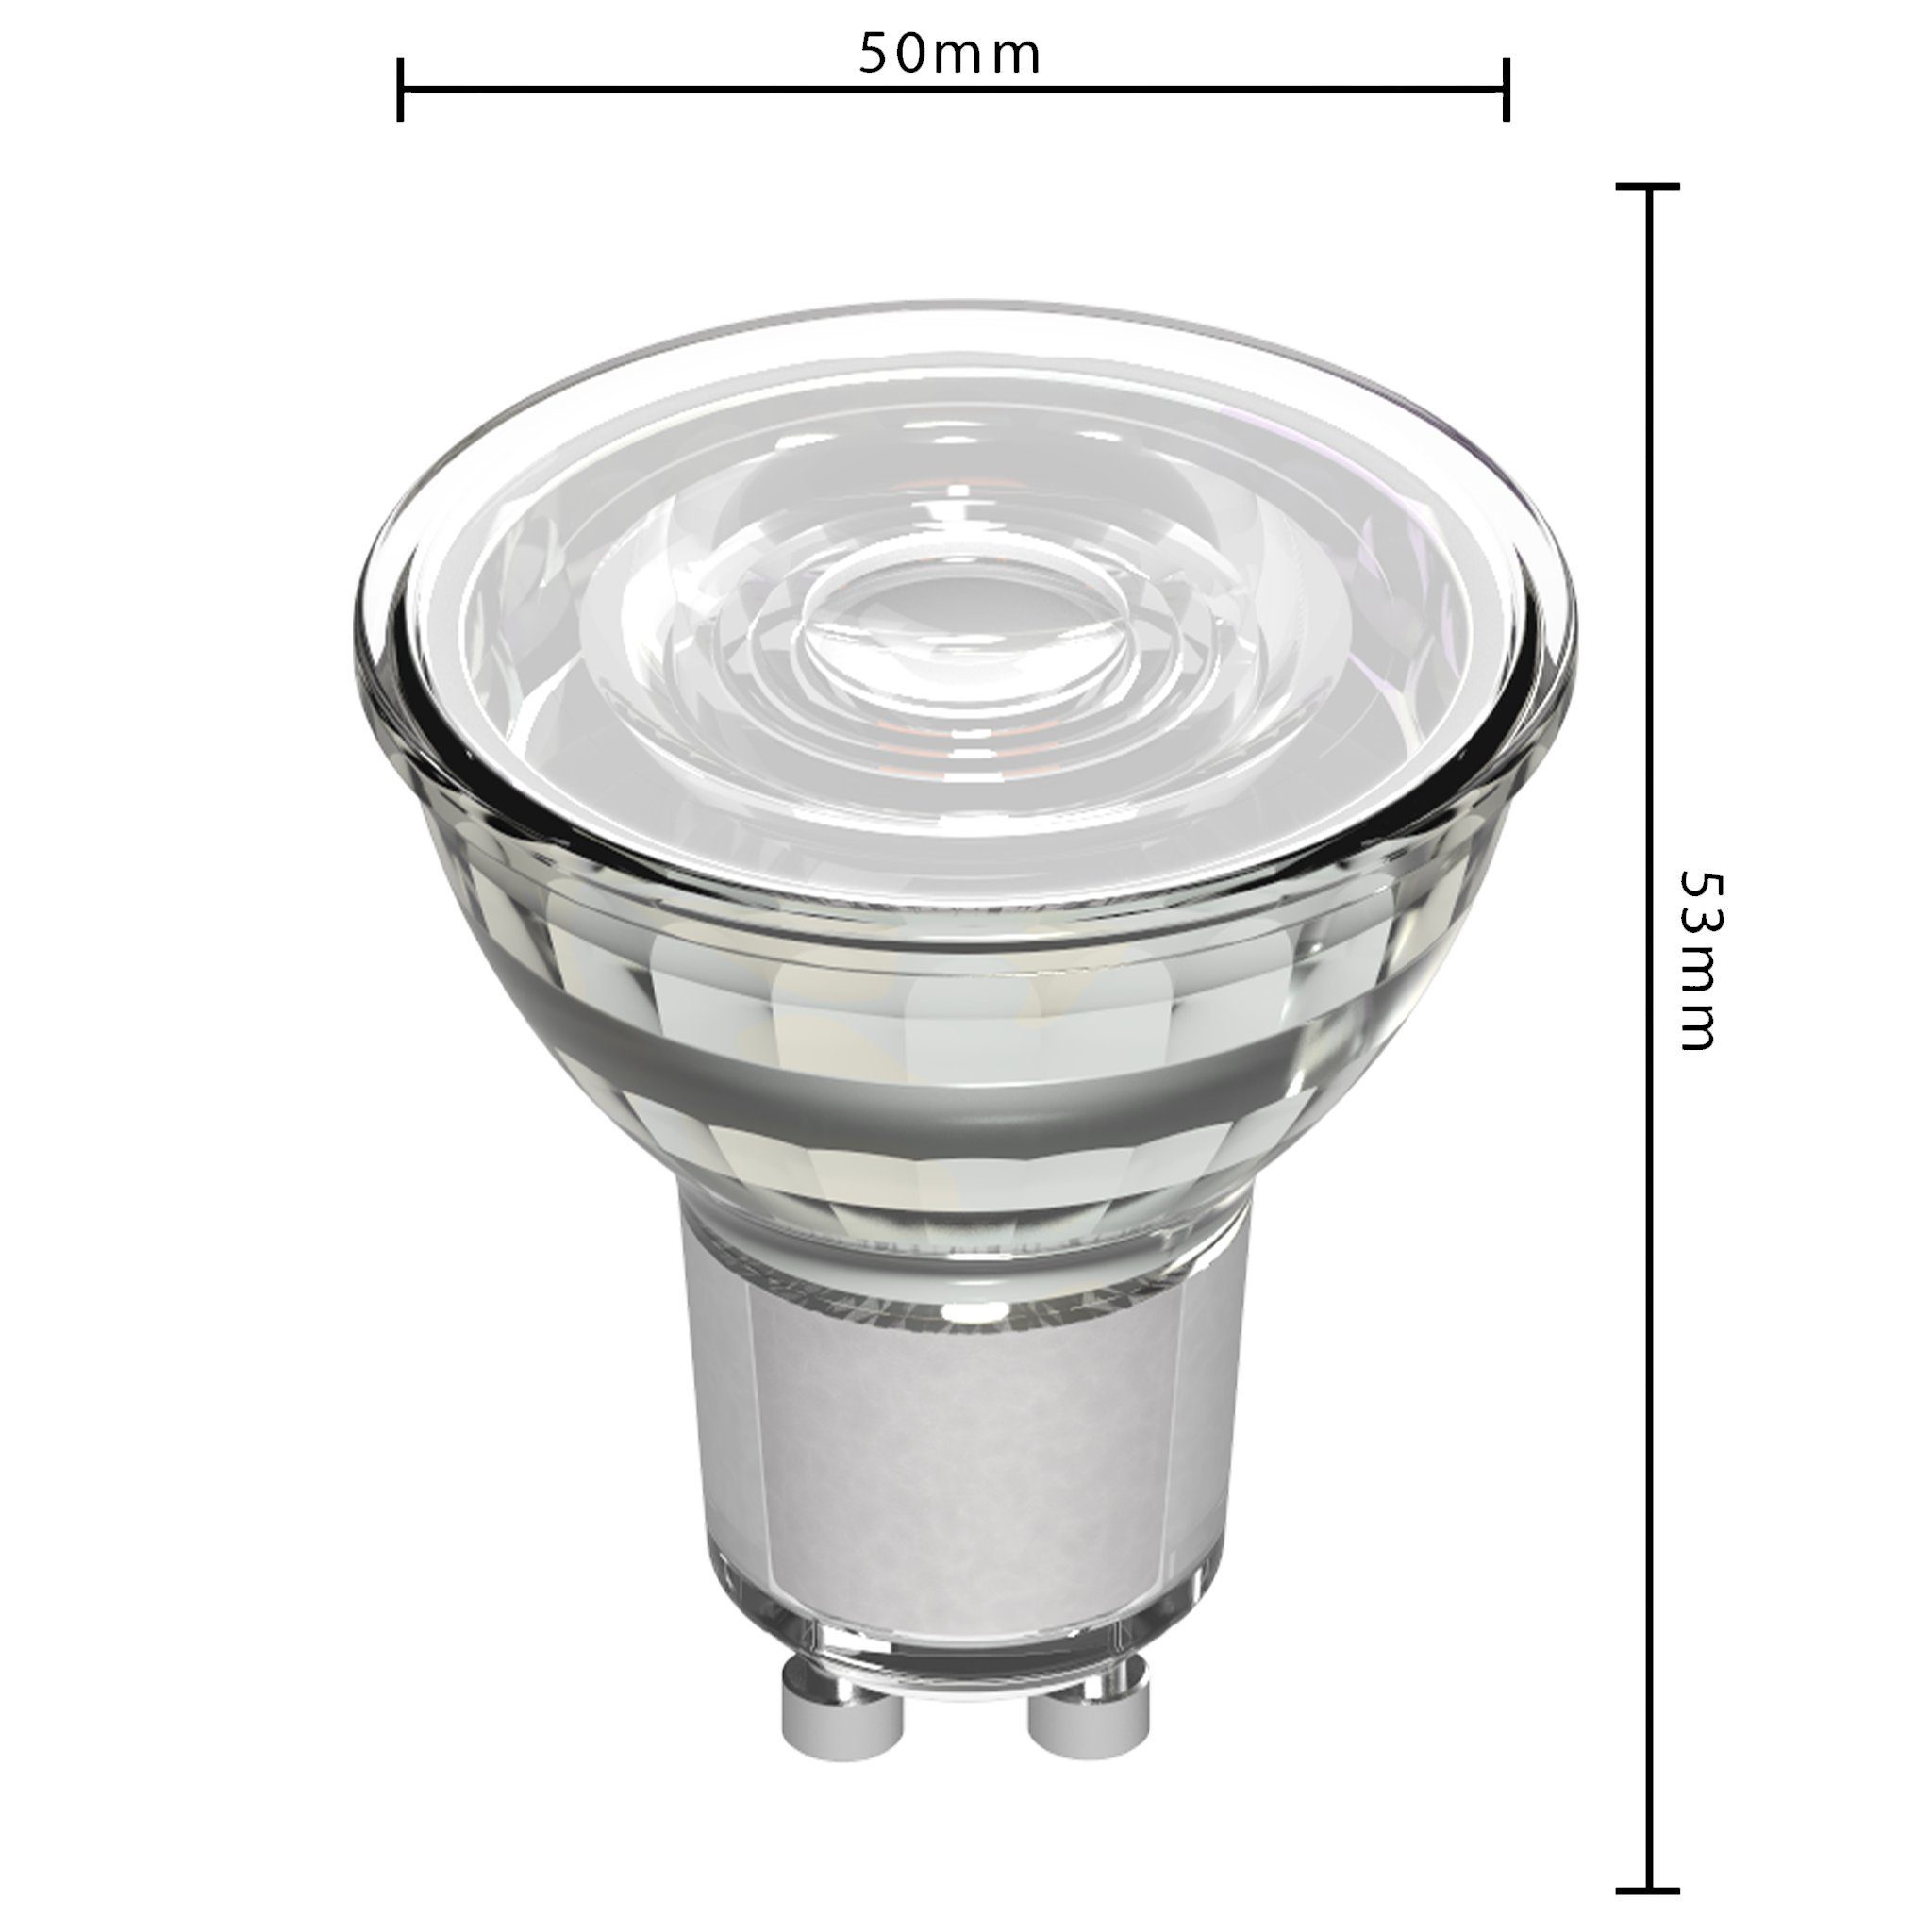 LED's light LED-Leuchtmittel Klar 3W GU10 GU10, 0620120 Spot, PAR16 warmweiß LED